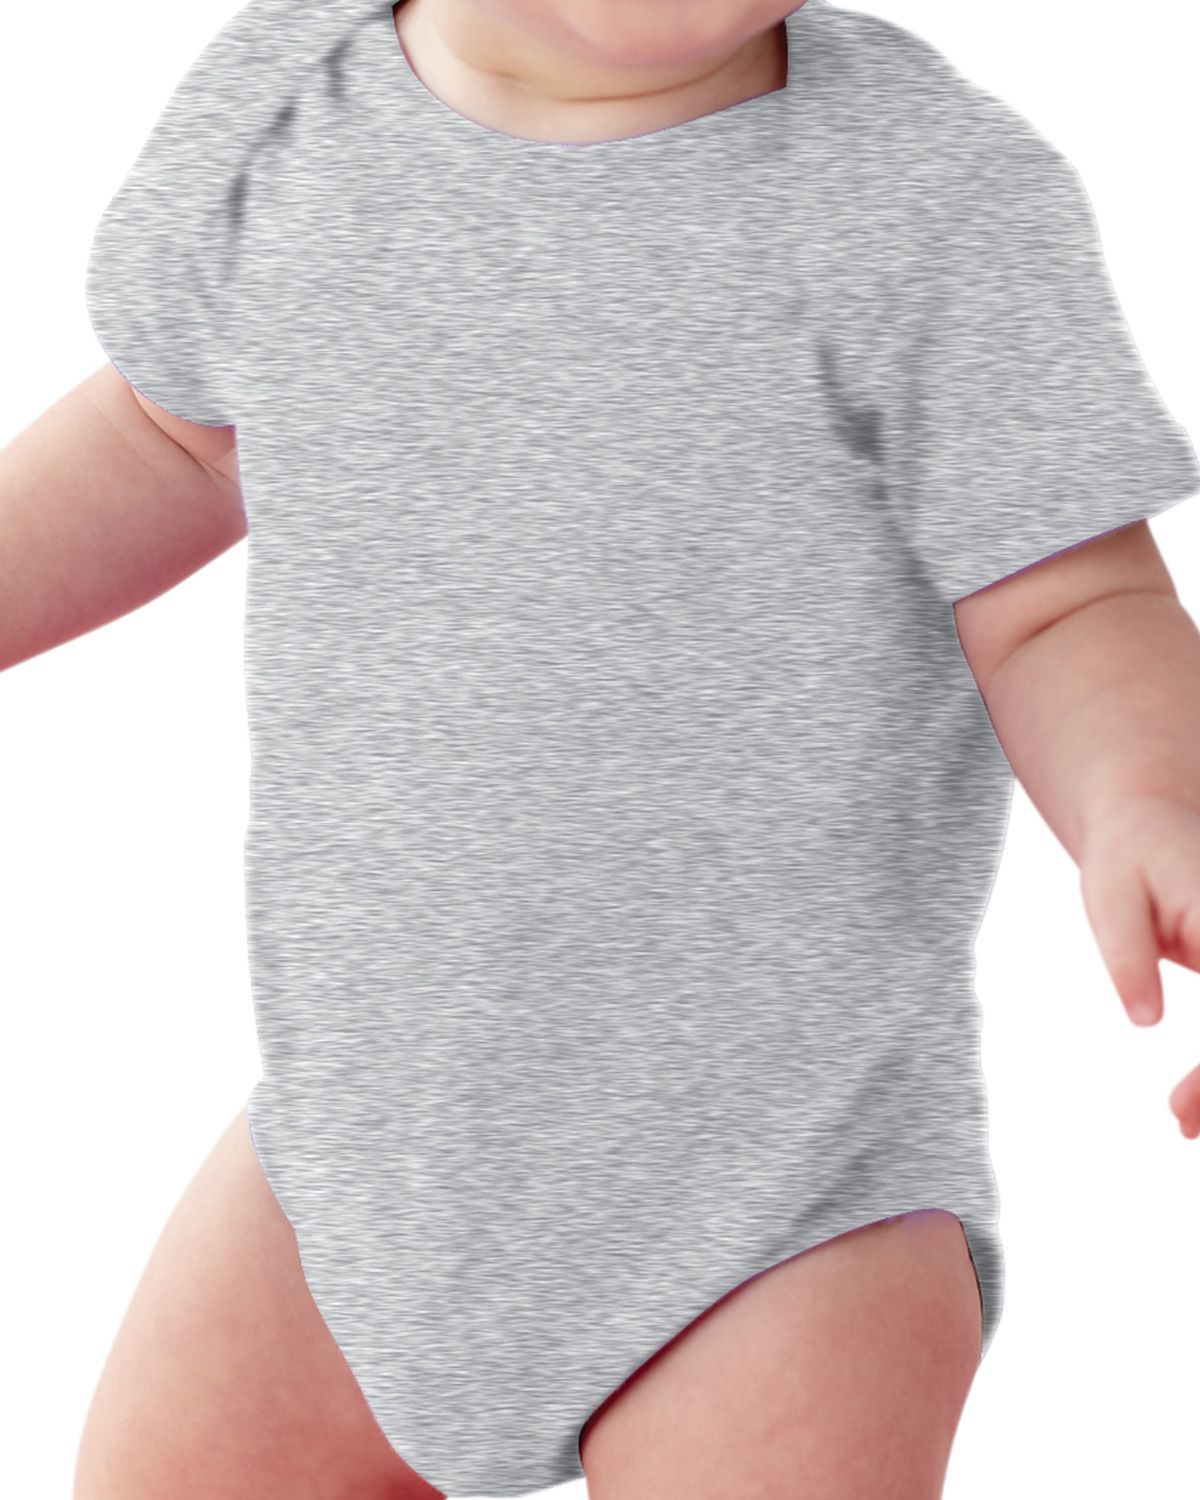 Rabbit Skins 4424 Infant Fine Jersey Lap Shoulder Bodysuit